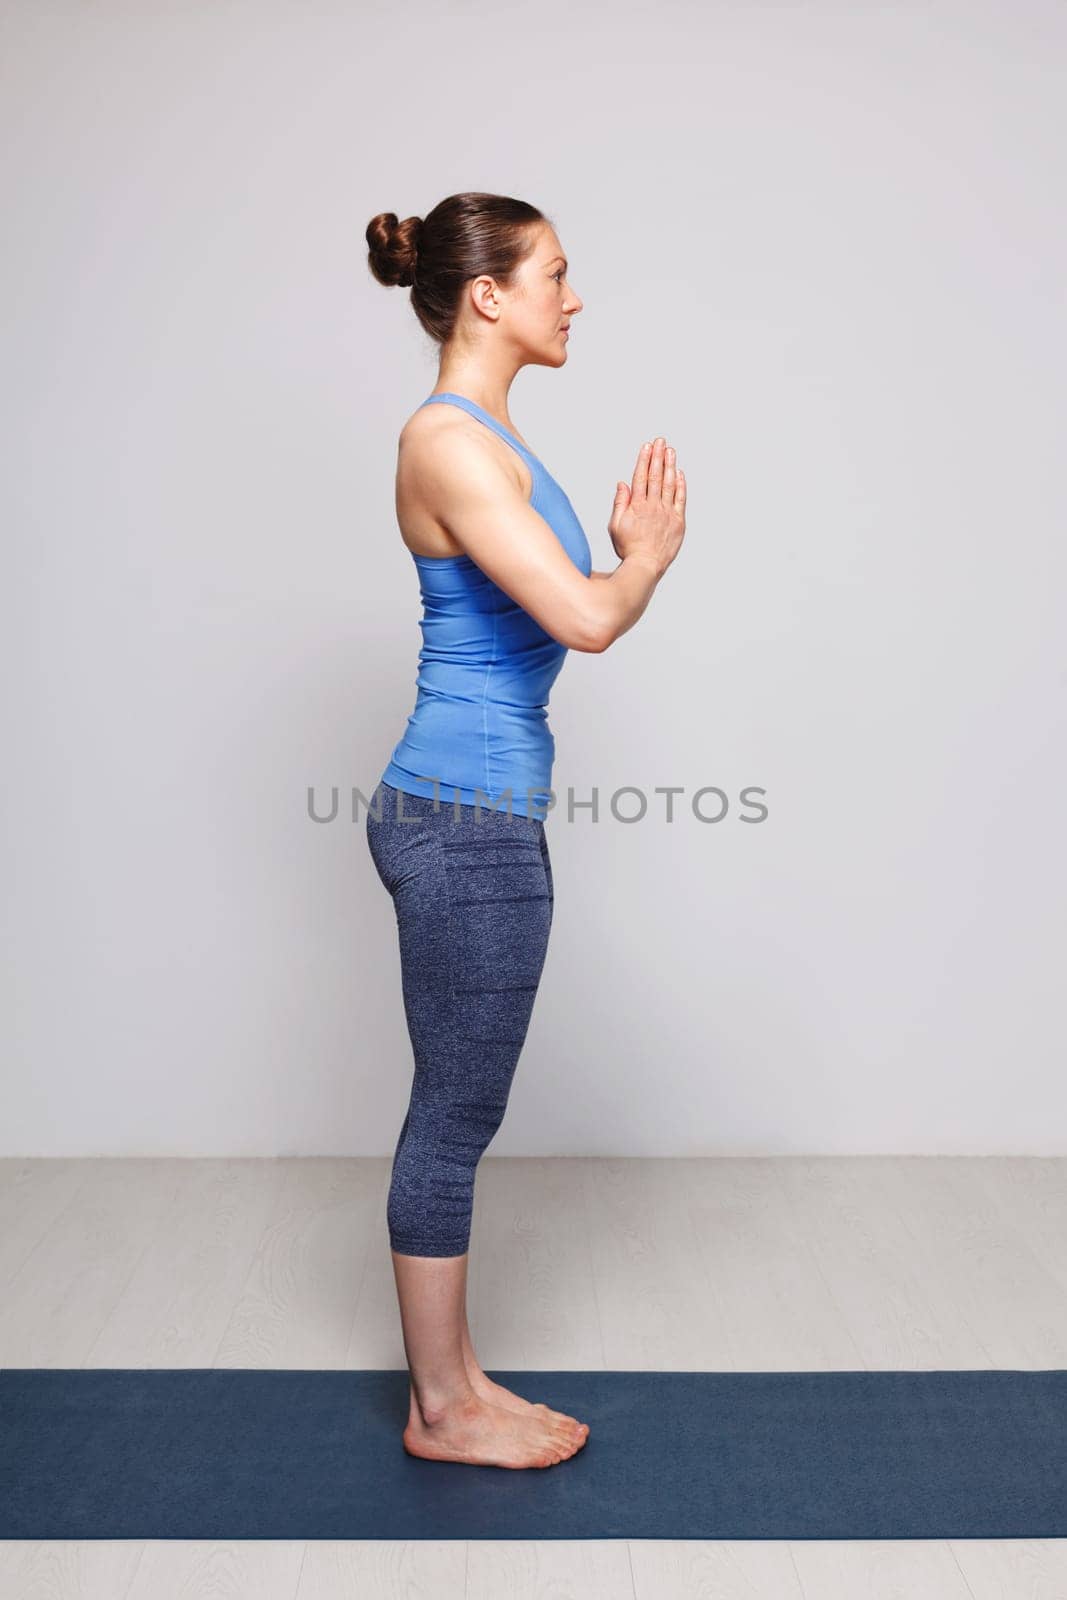 Woman doing Hatha Yoga asana Tadasana namaste -Mountain pose with salutation on yoga mat in studio on grey bagckground